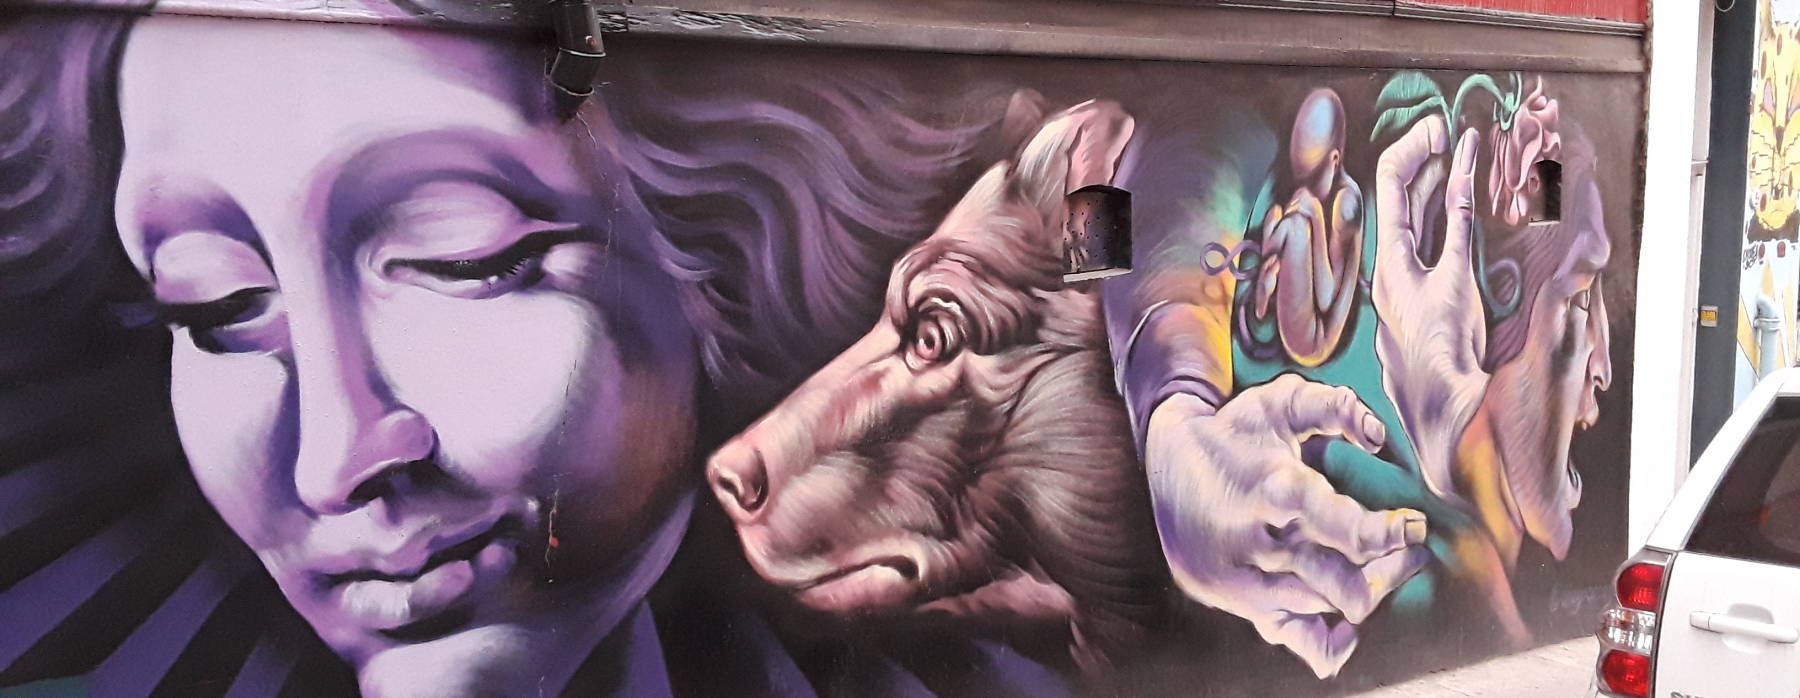 street art in Valparaíso.